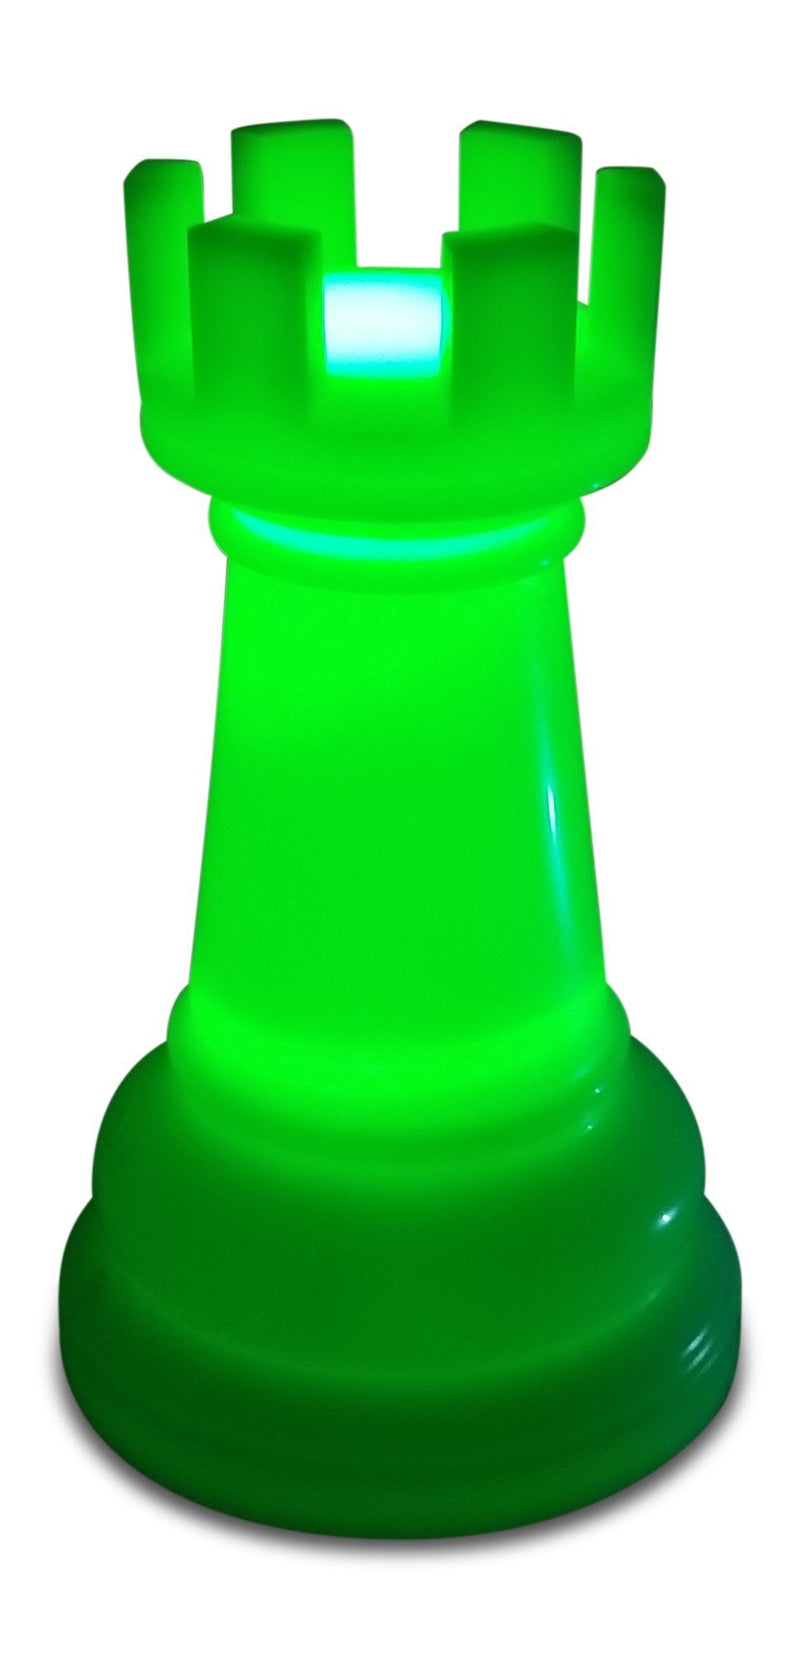 MegaChess 21 Inch Perfect Rook Light-Up Giant Chess Piece - Green | Default Title | MegaChess.com